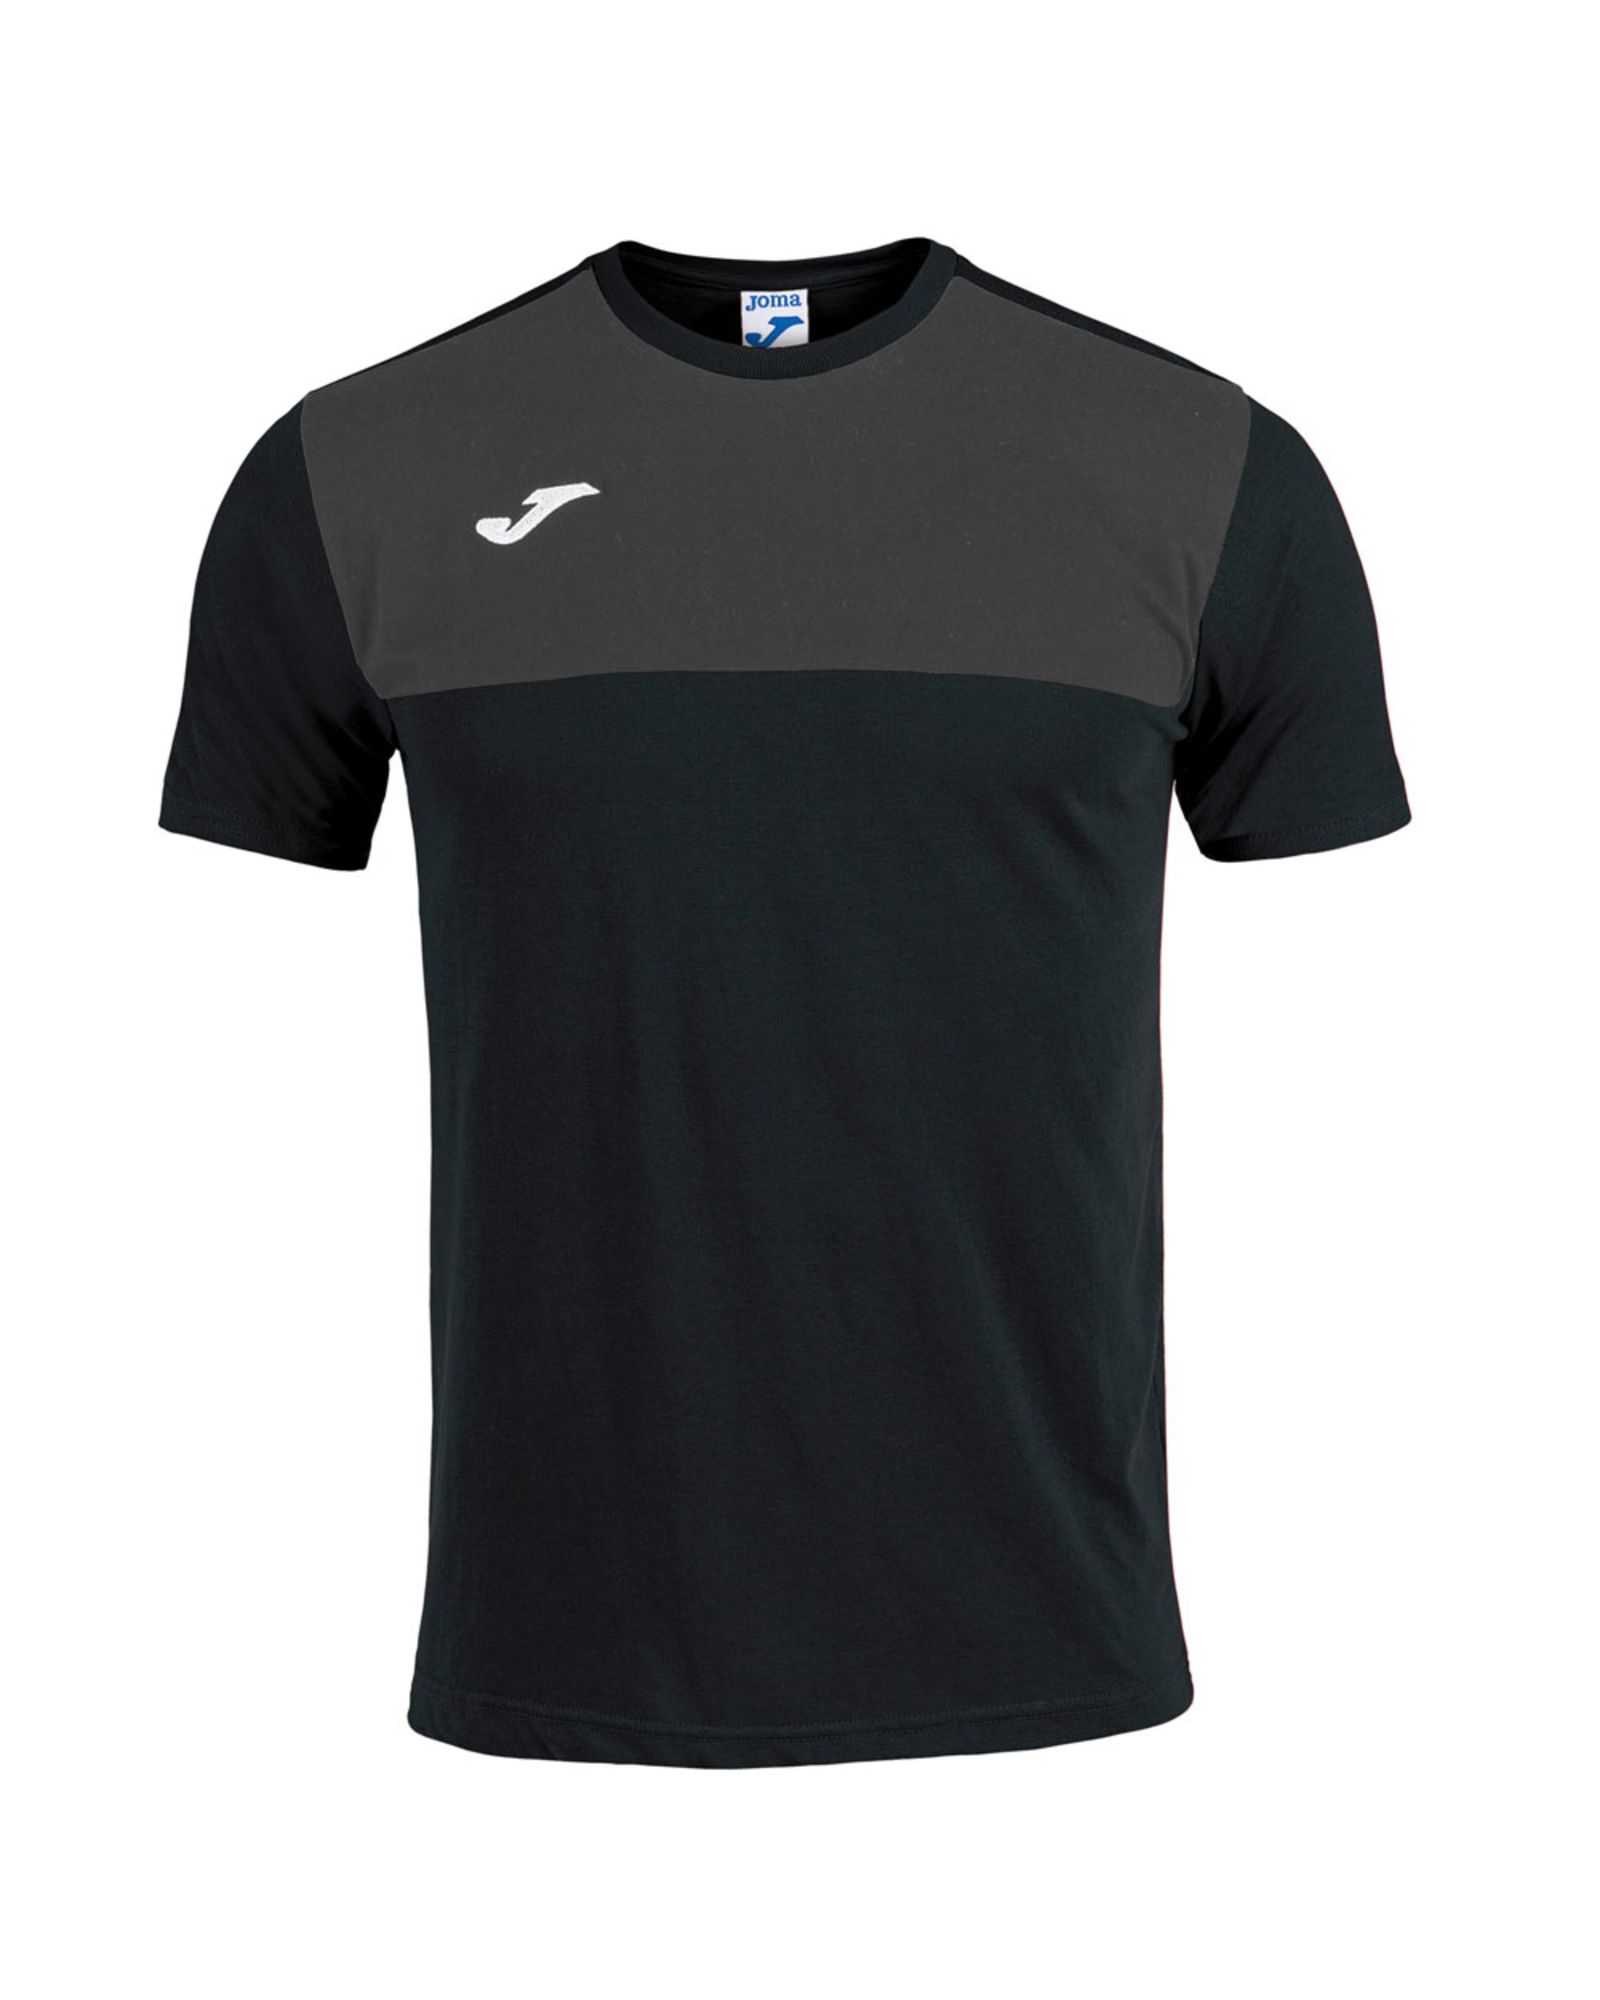 Camiseta Winner Negro - Fútbol Factory